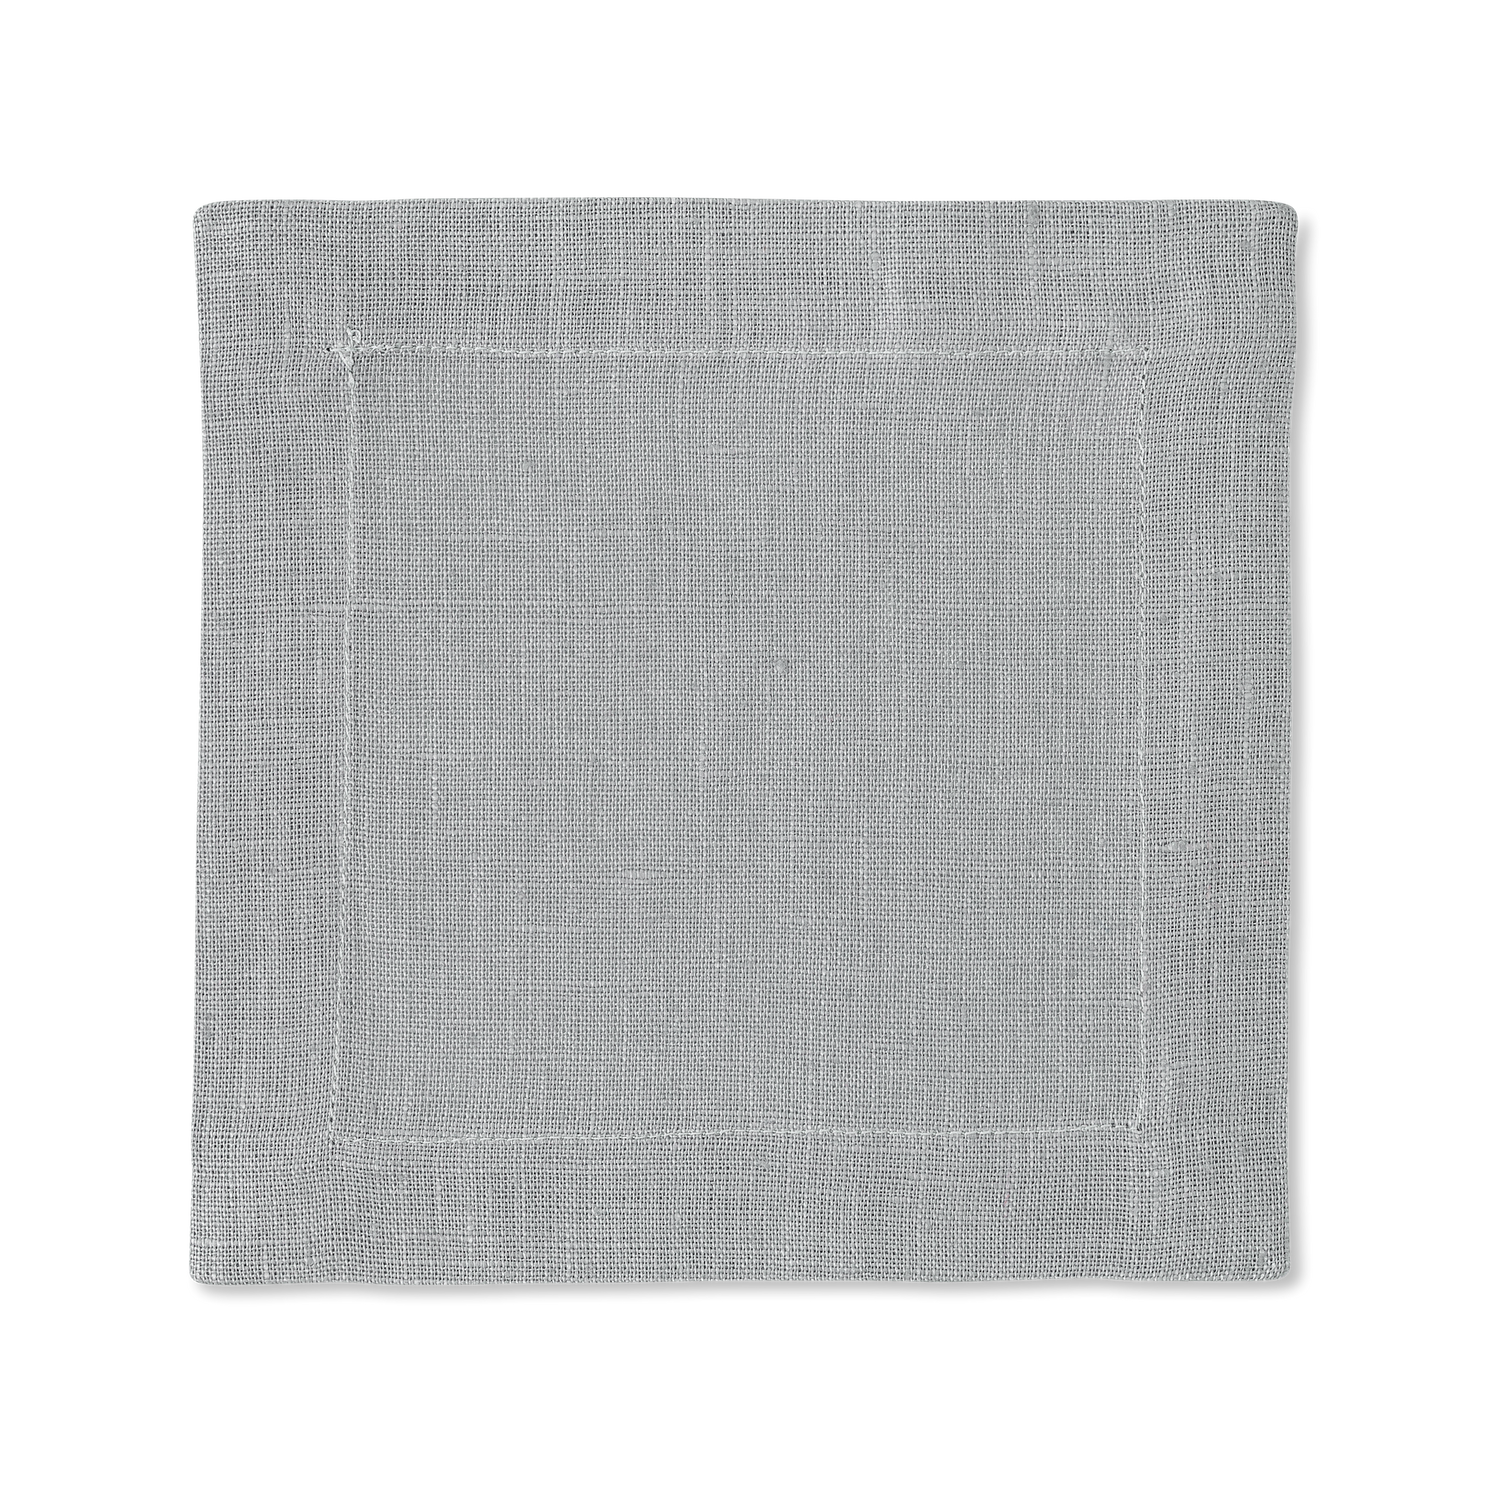 A square linen cocktail napkin in the color gray